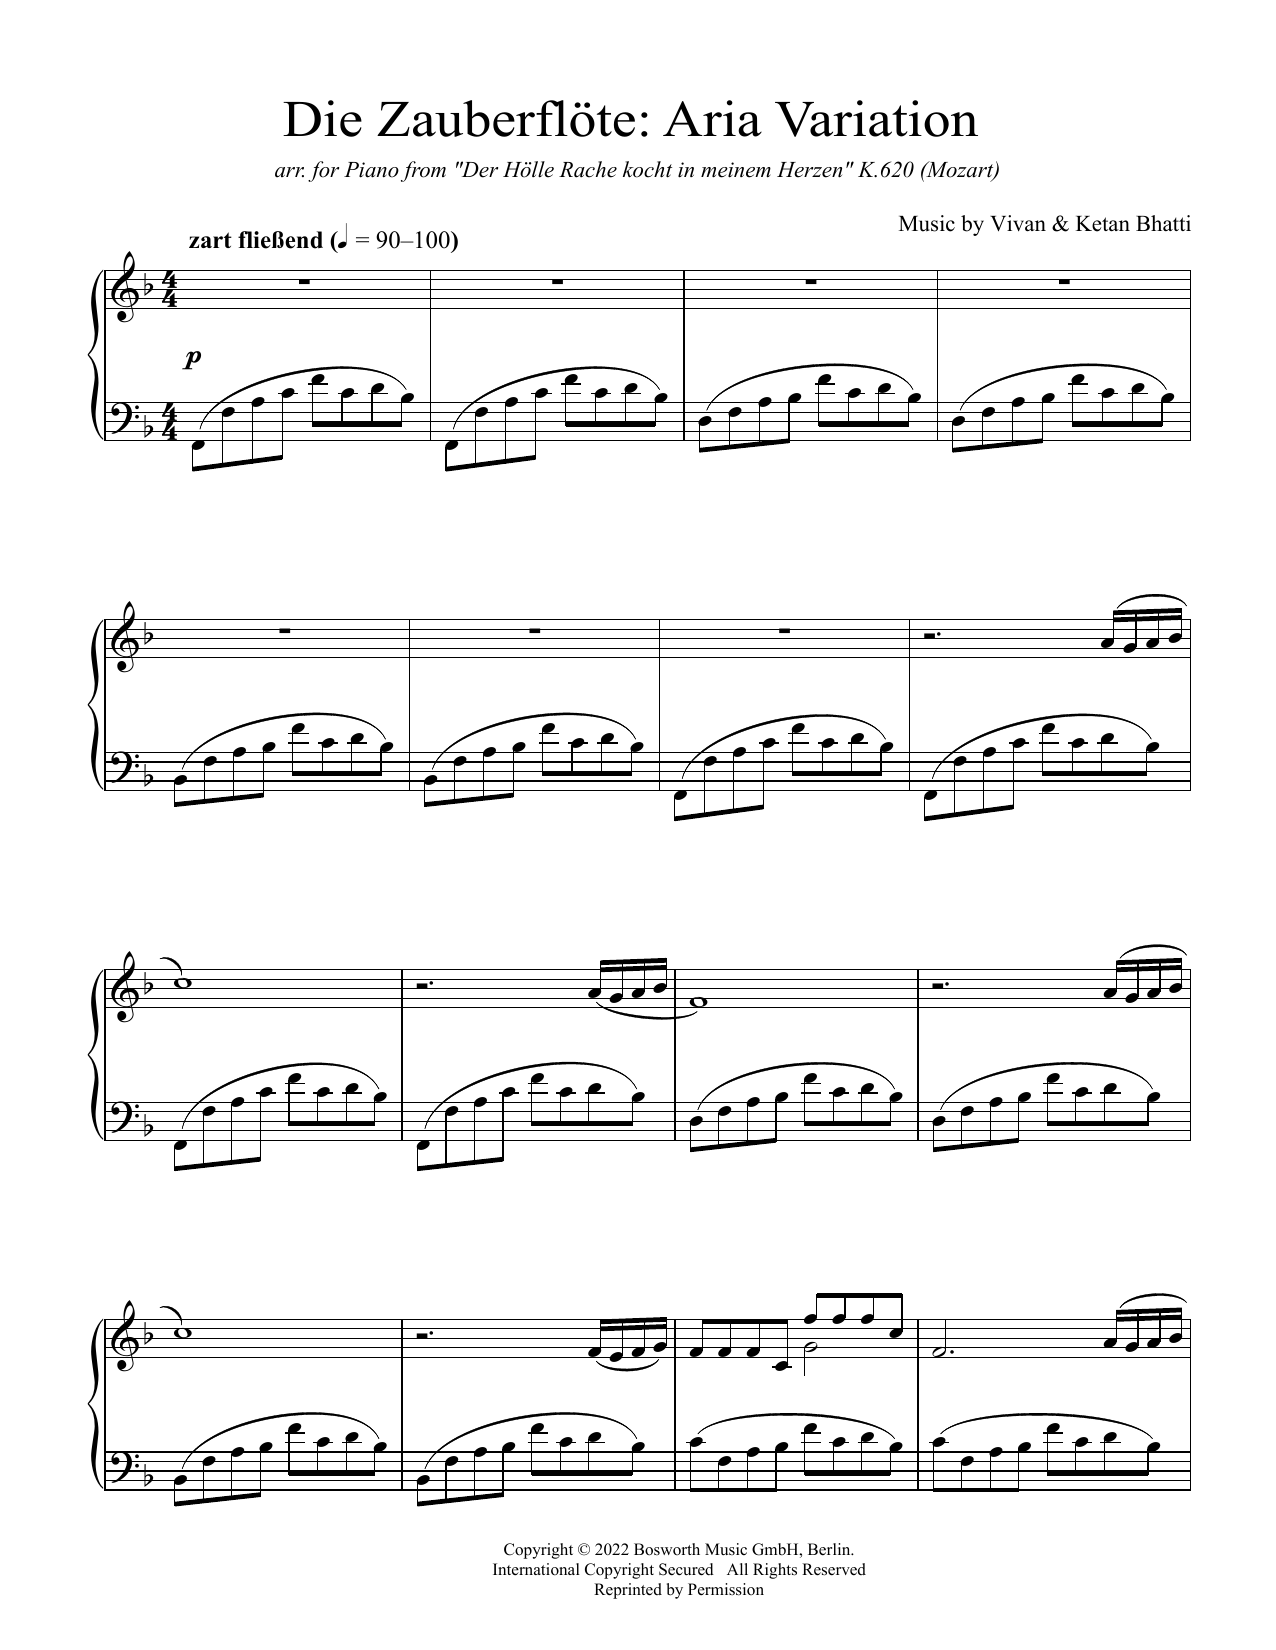 Vivan & Ketan Bhatti Die Zauberflöte: Aria Variation Sheet Music Notes & Chords for Piano Solo - Download or Print PDF